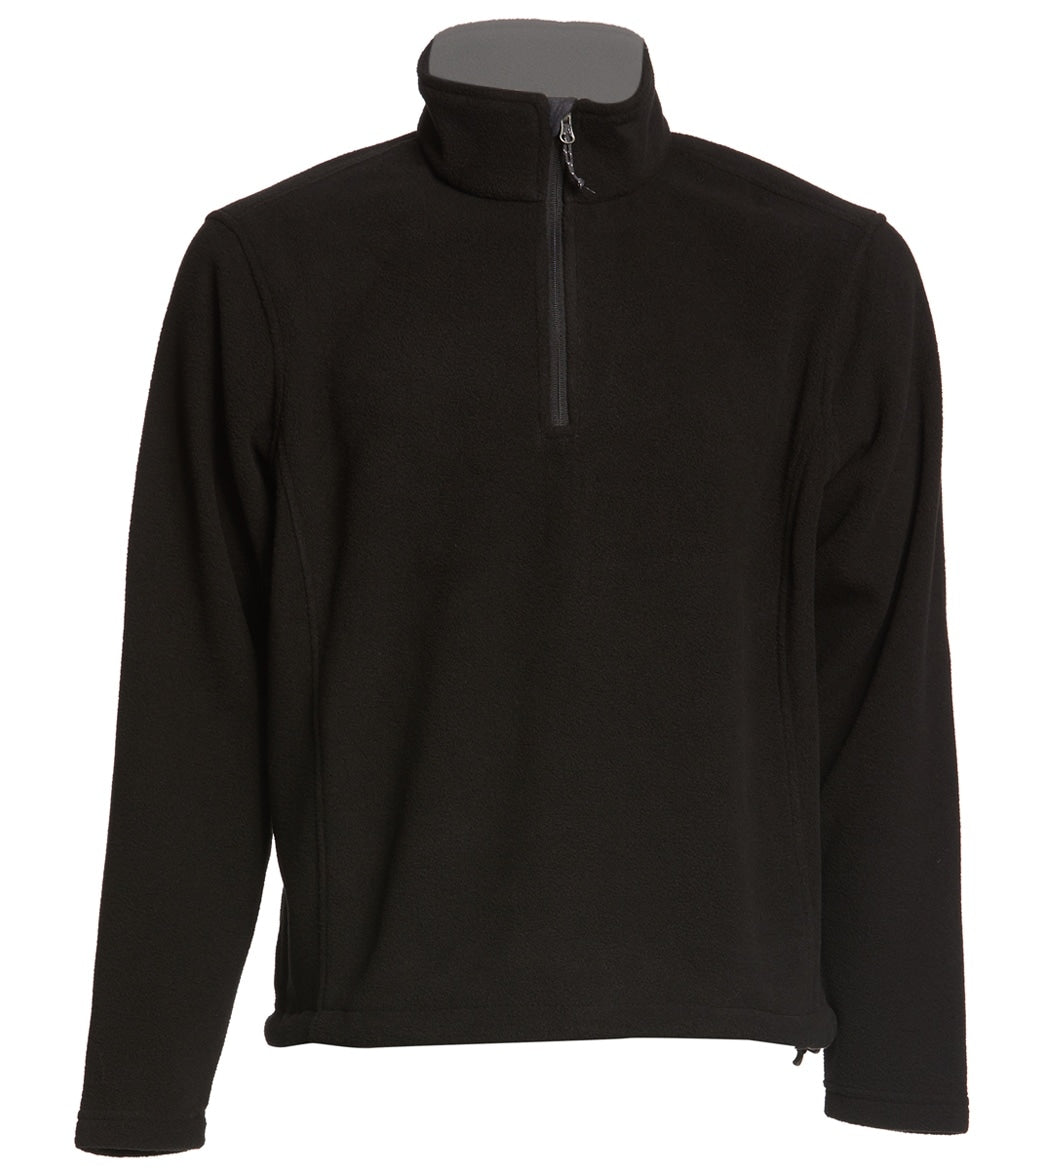 Adult Men's Fleece 1/4-Zip Pullover - Black X-Small Polyester - Swimoutlet.com